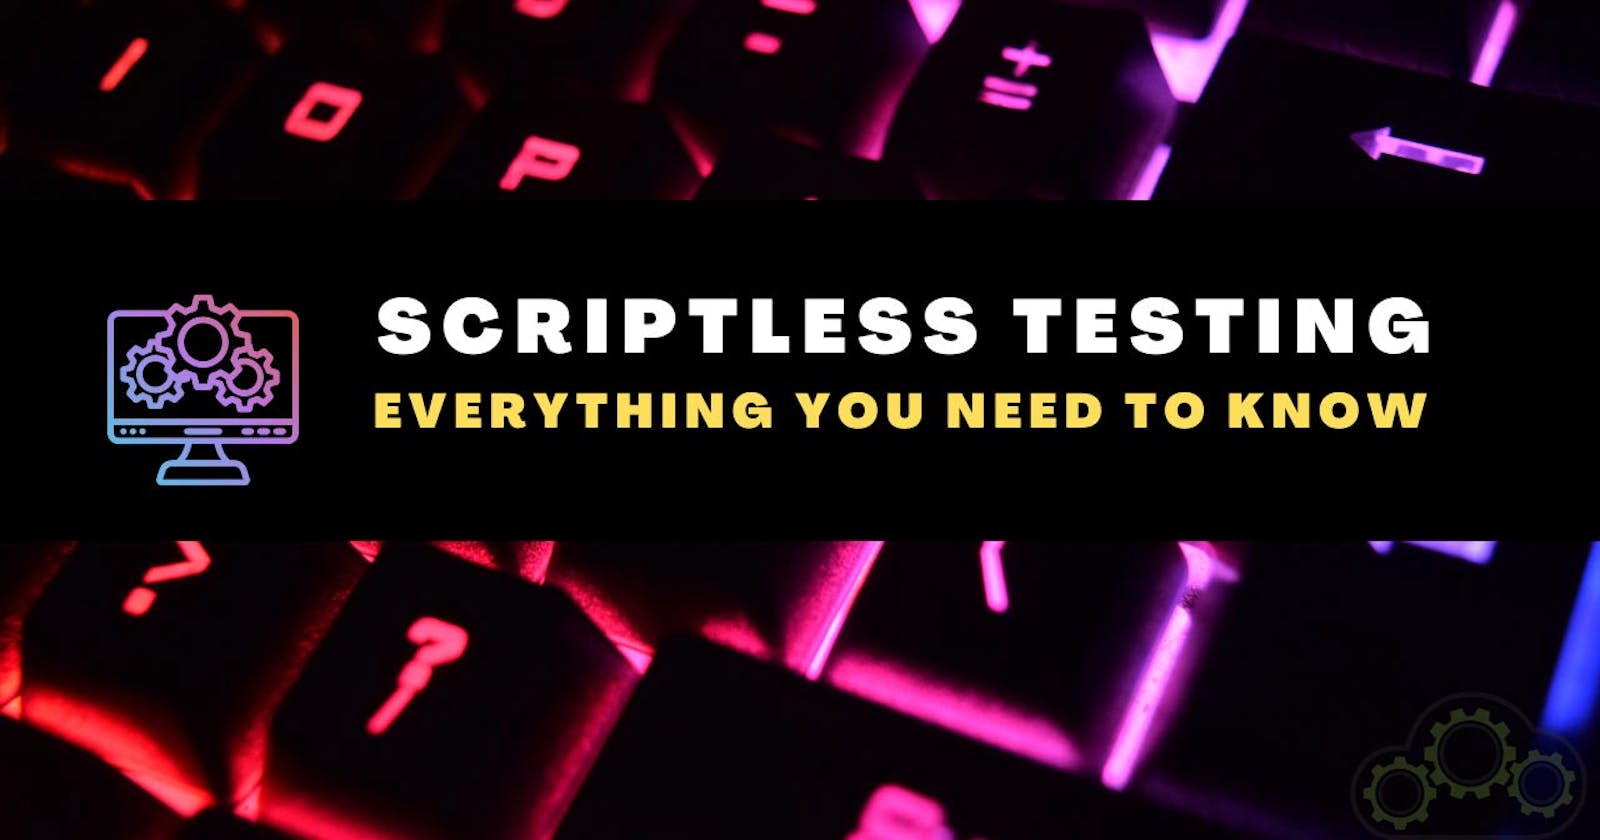 What is Scriptless testing?